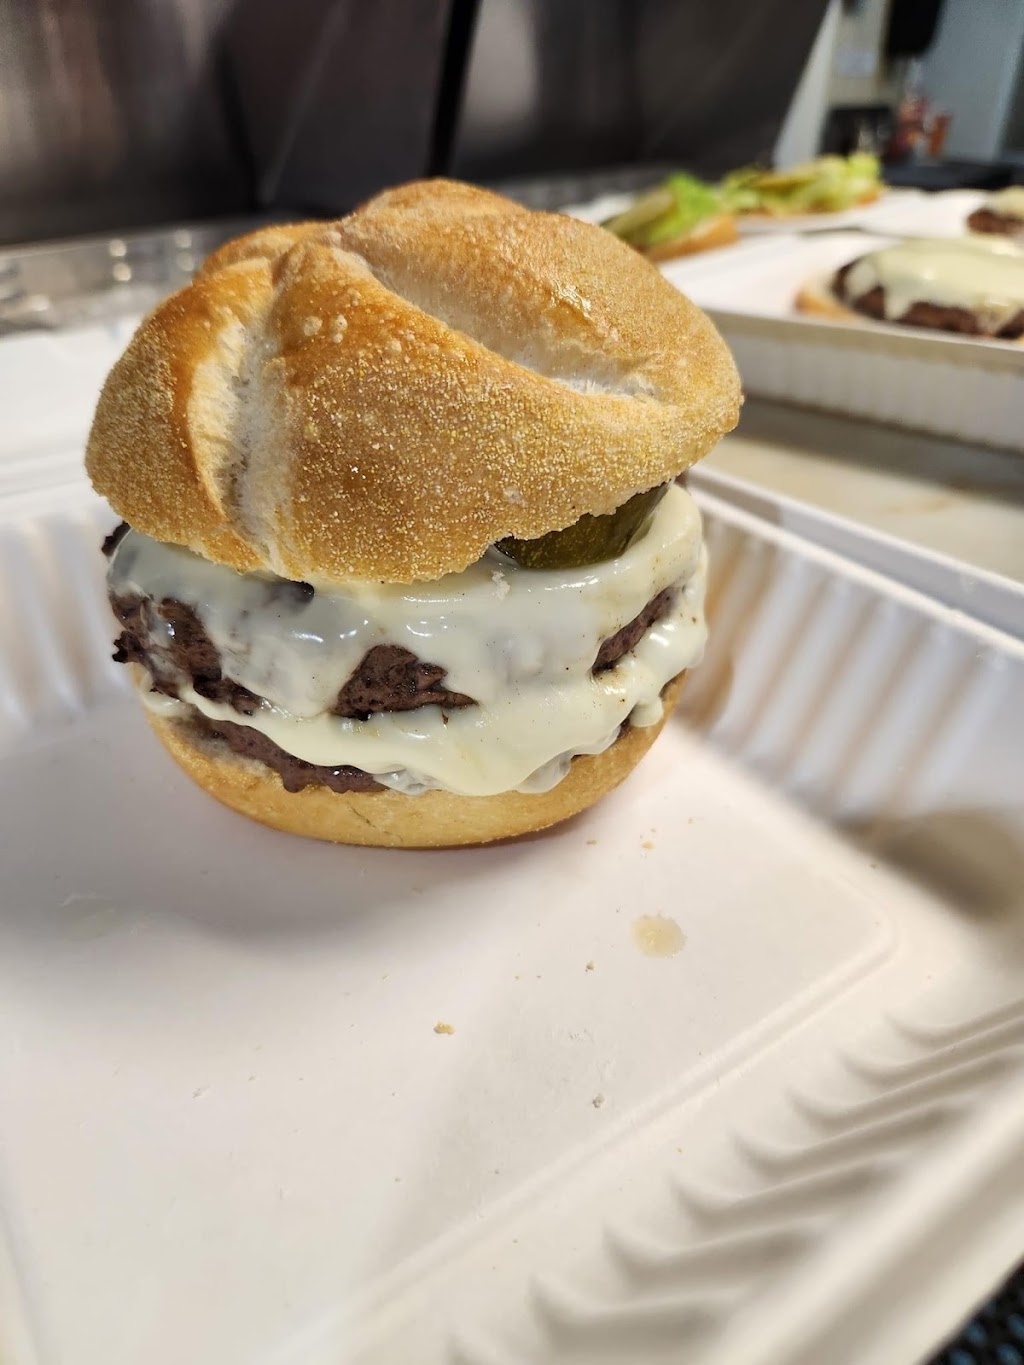 Biggies Burgers | 2906 S Black Horse Pike, Williamstown, NJ 08094 | Phone: (856) 545-9590